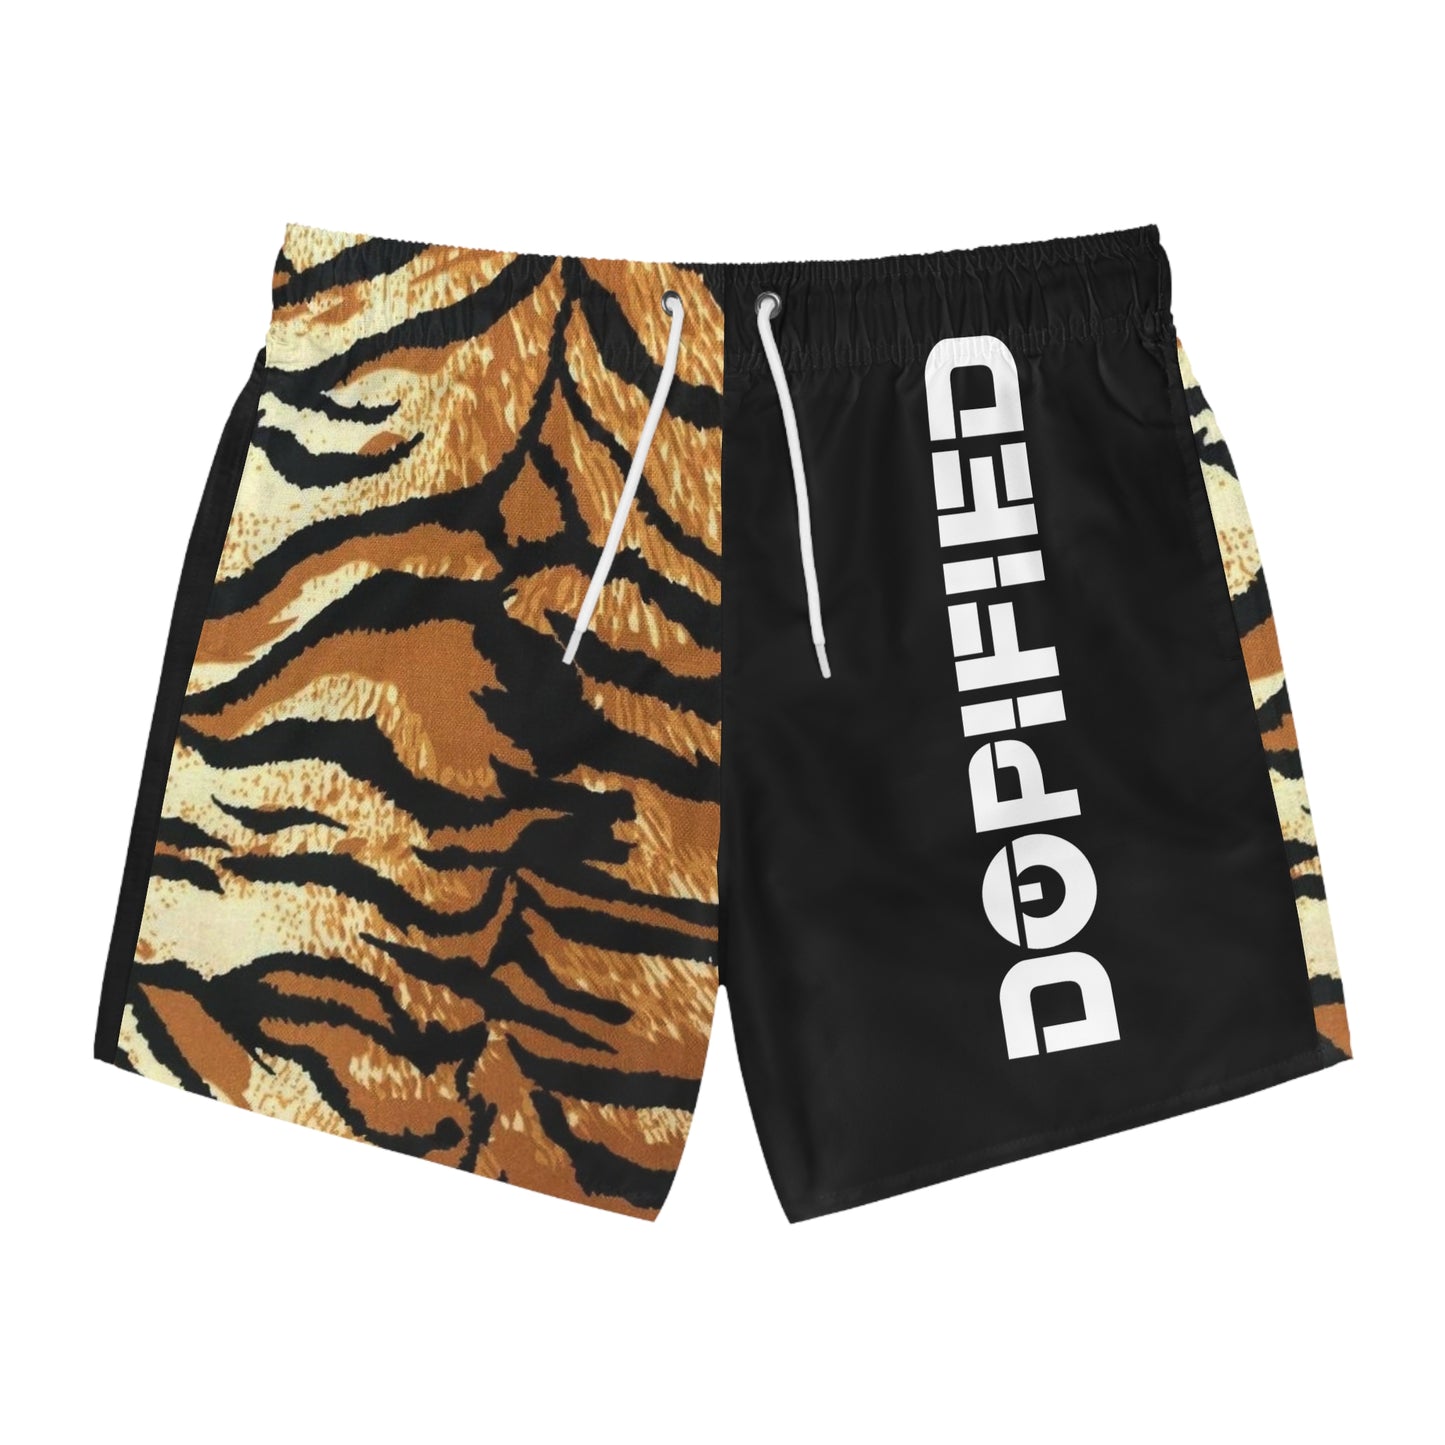 DOPiFiED “Tiger Mode” Swim Trunks